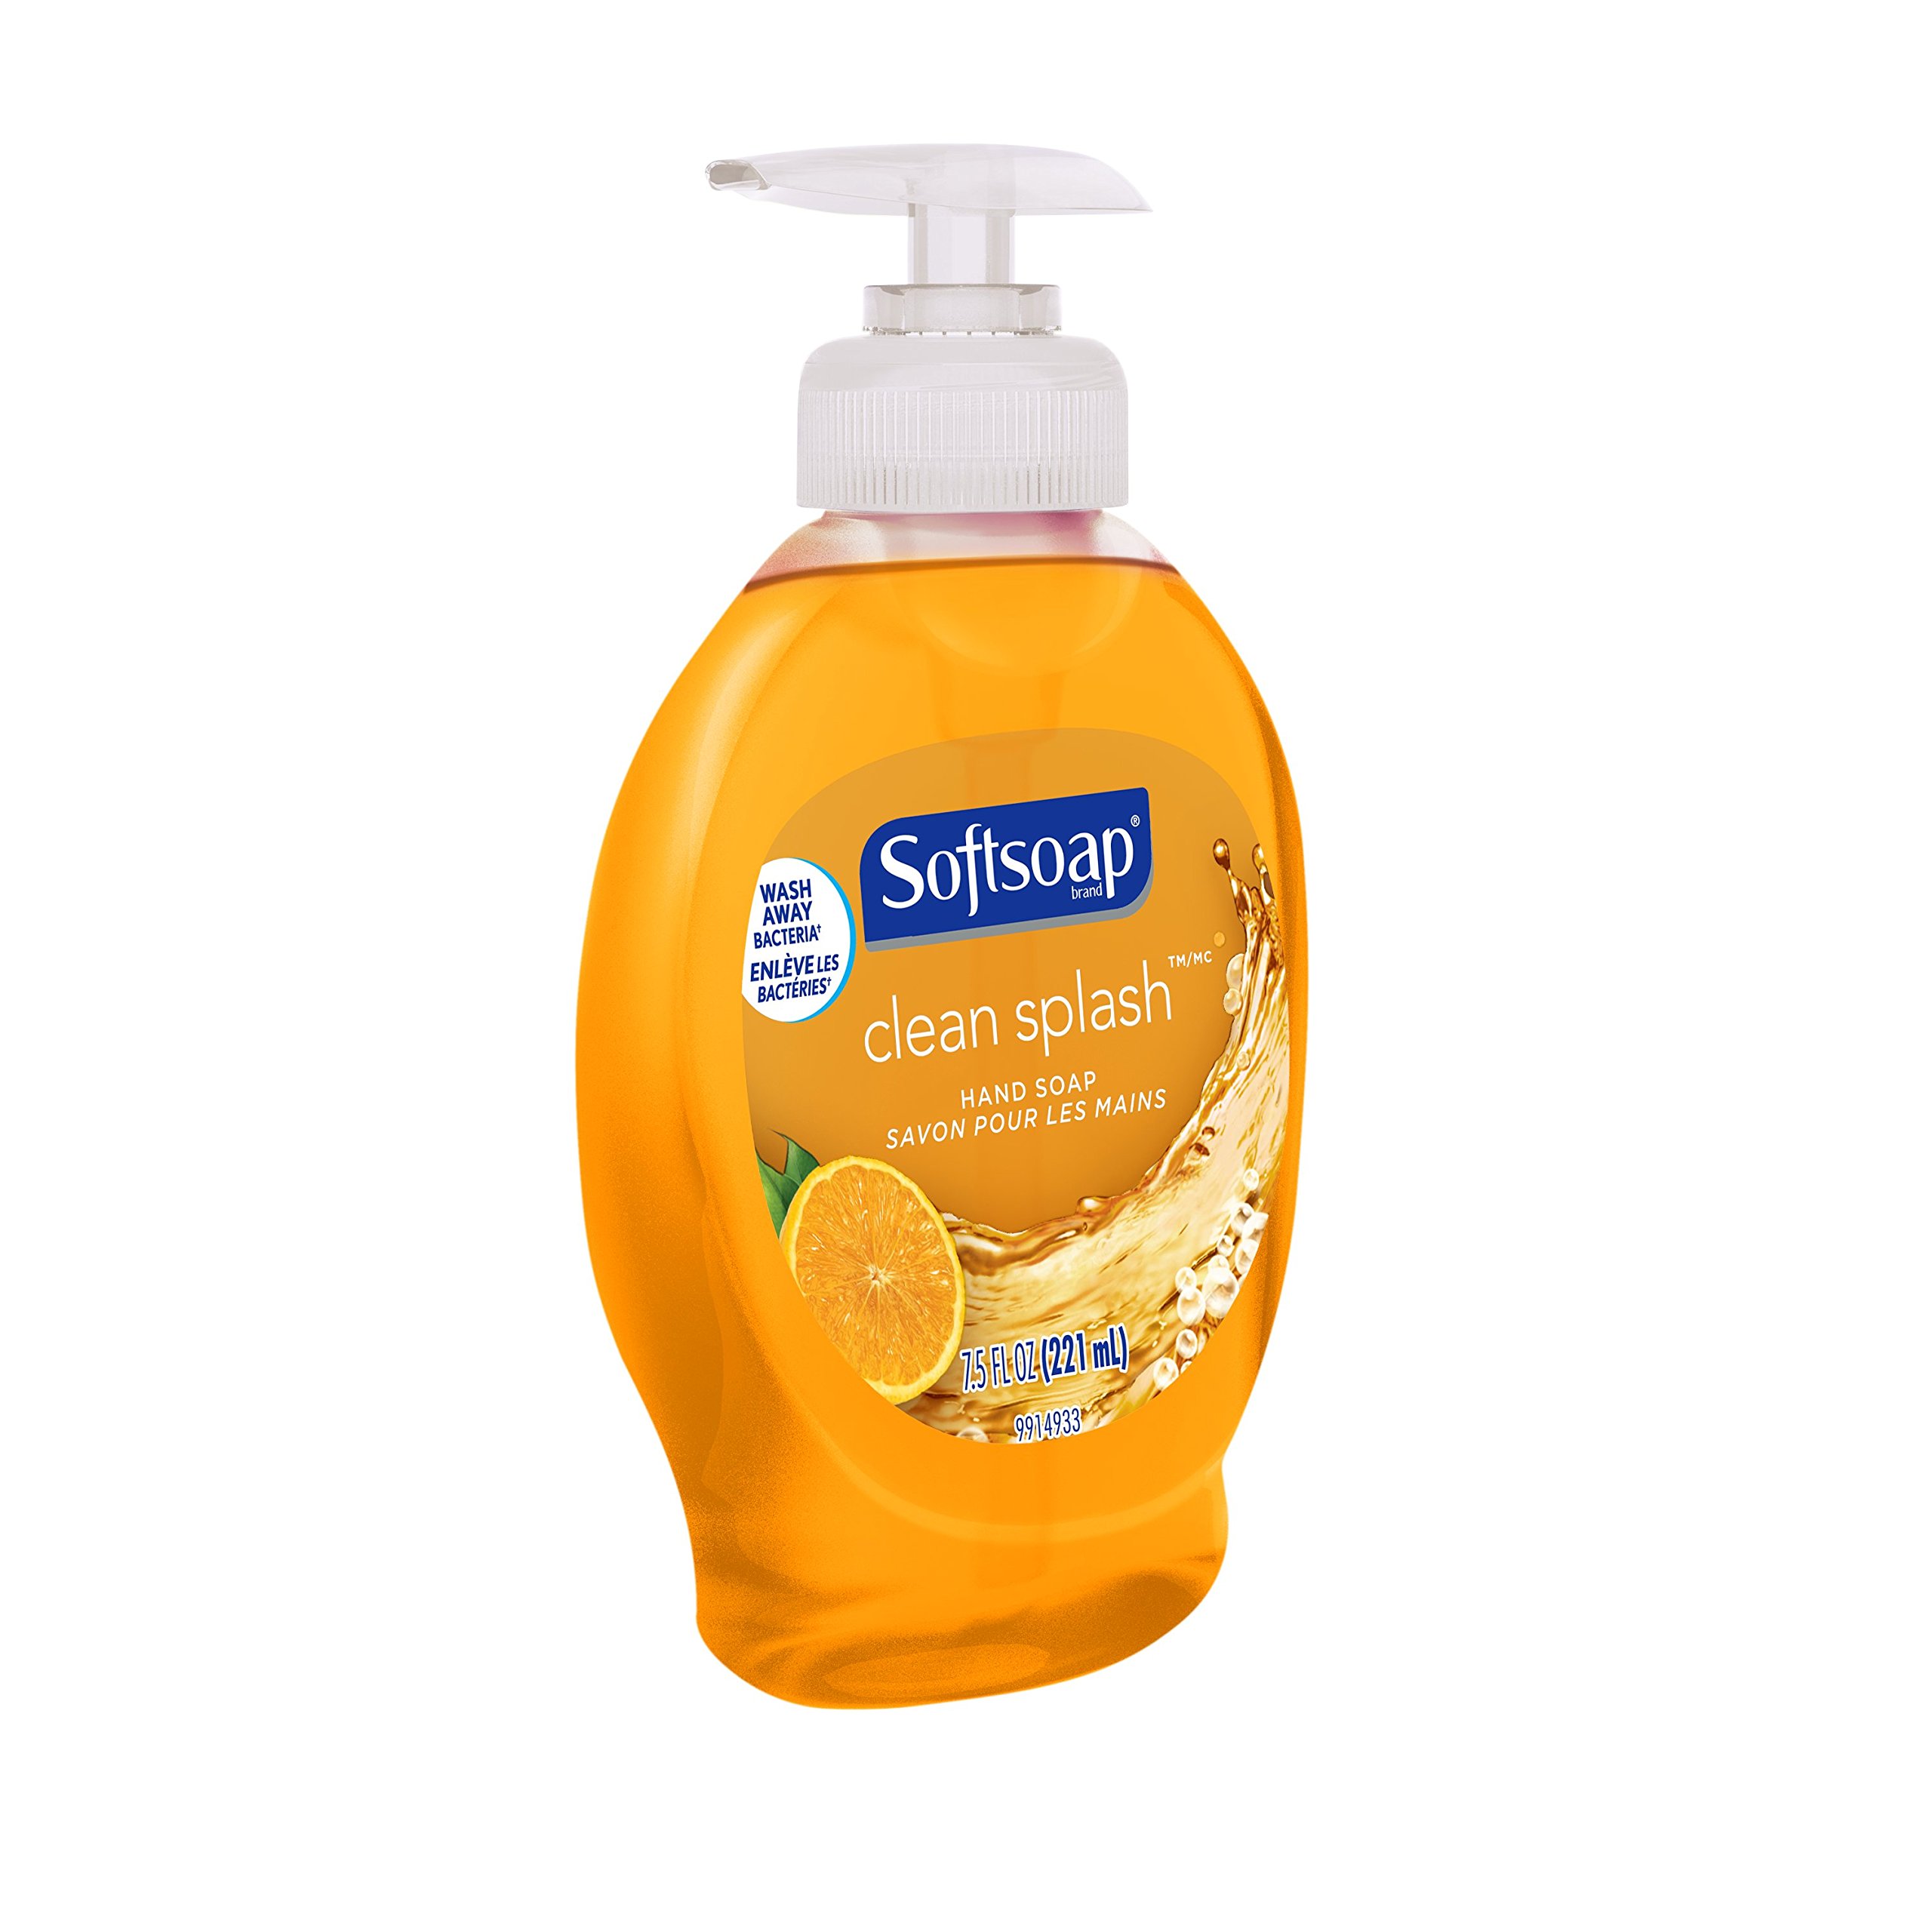 Softsoap Liquid Hand Soap, Clean Splash - 7.5 fluid ounce